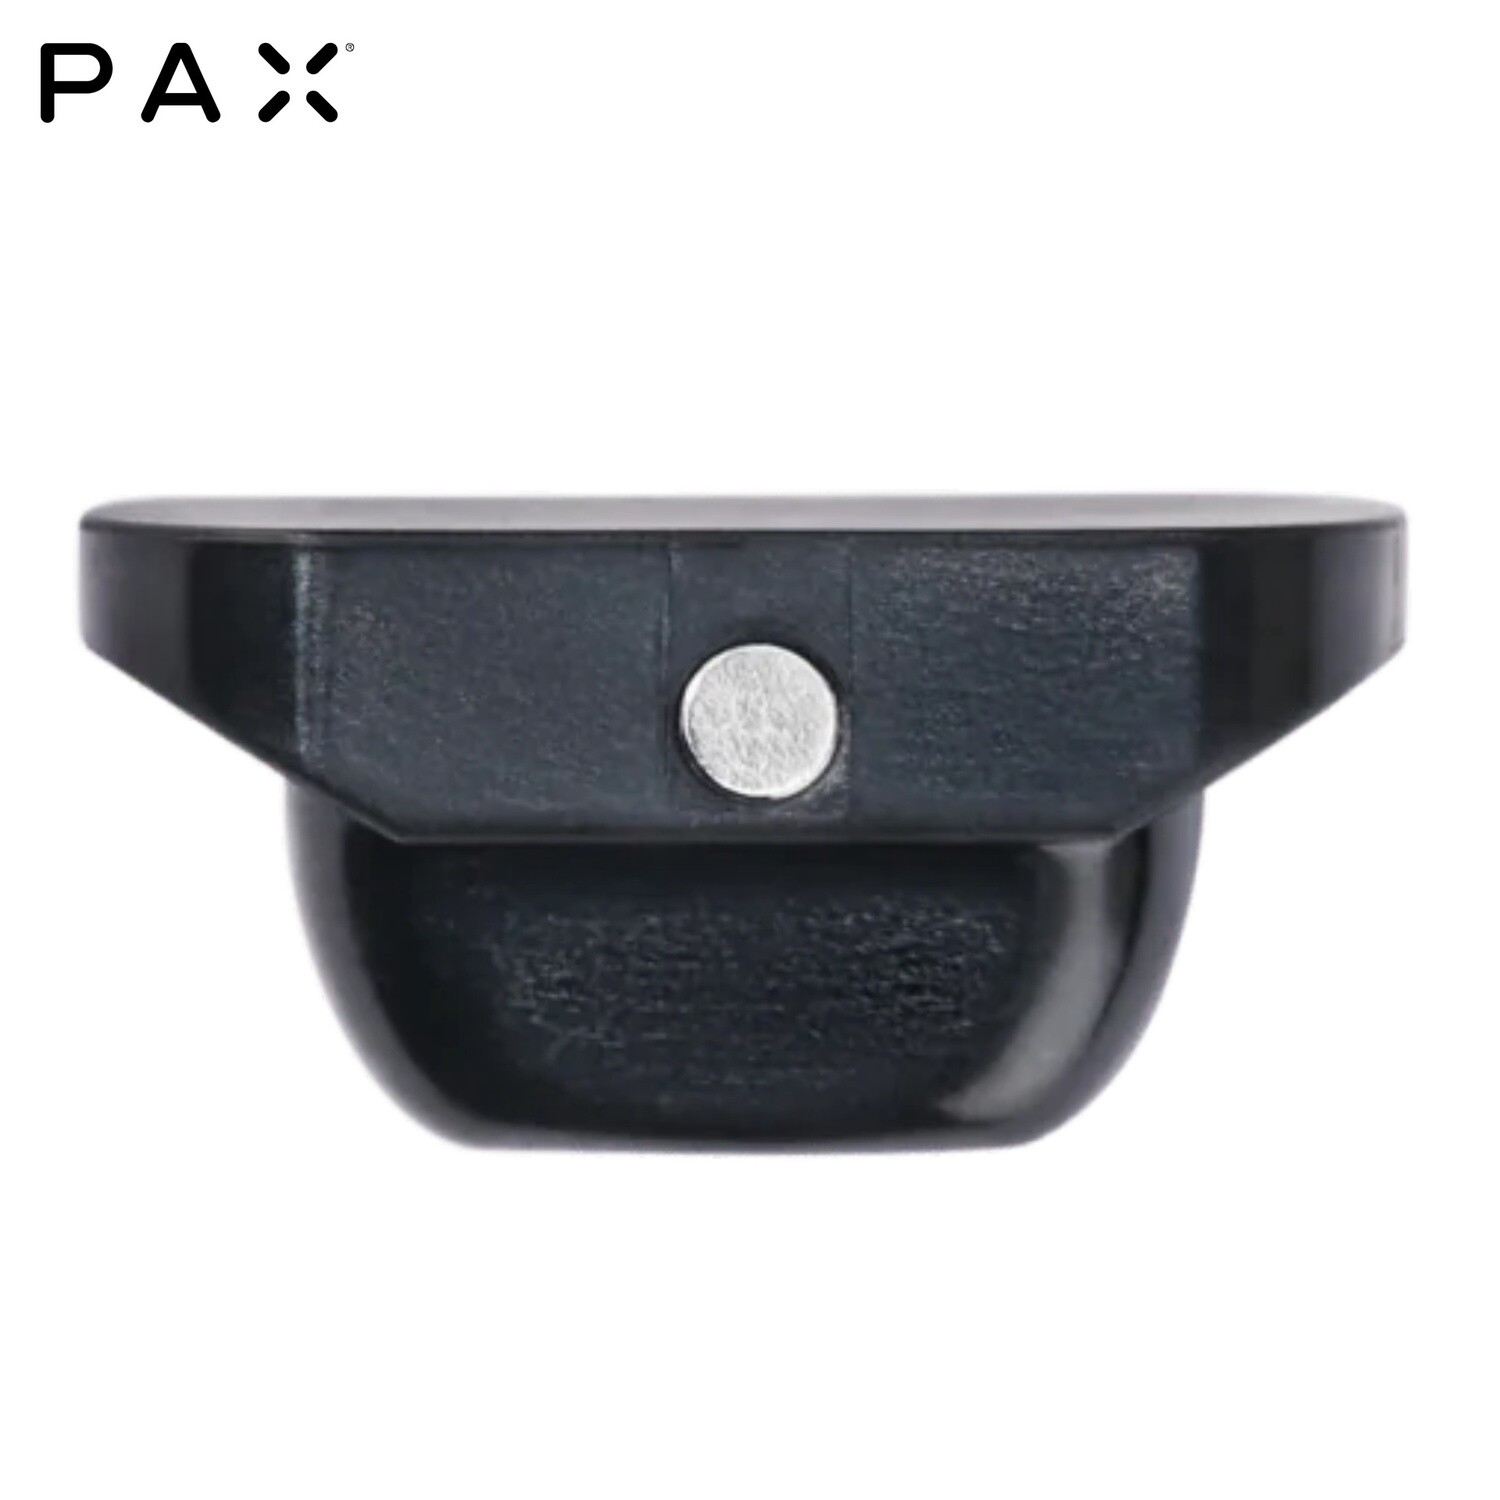 PAX® Half Pack Oven Lid